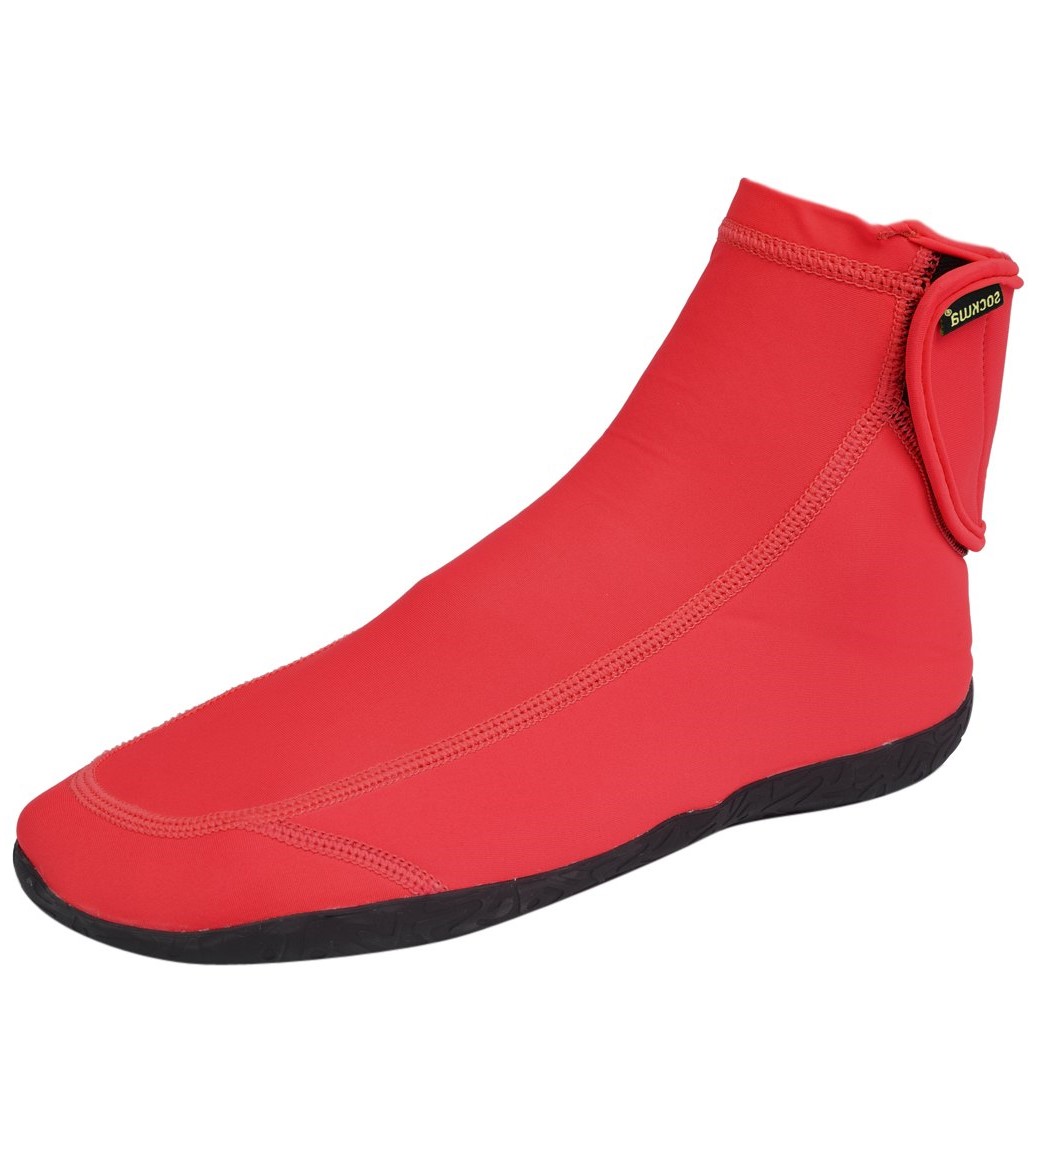 Sockwa Water Shoeswa G Hi Shoes - Red W6/M5 - Swimoutlet.com